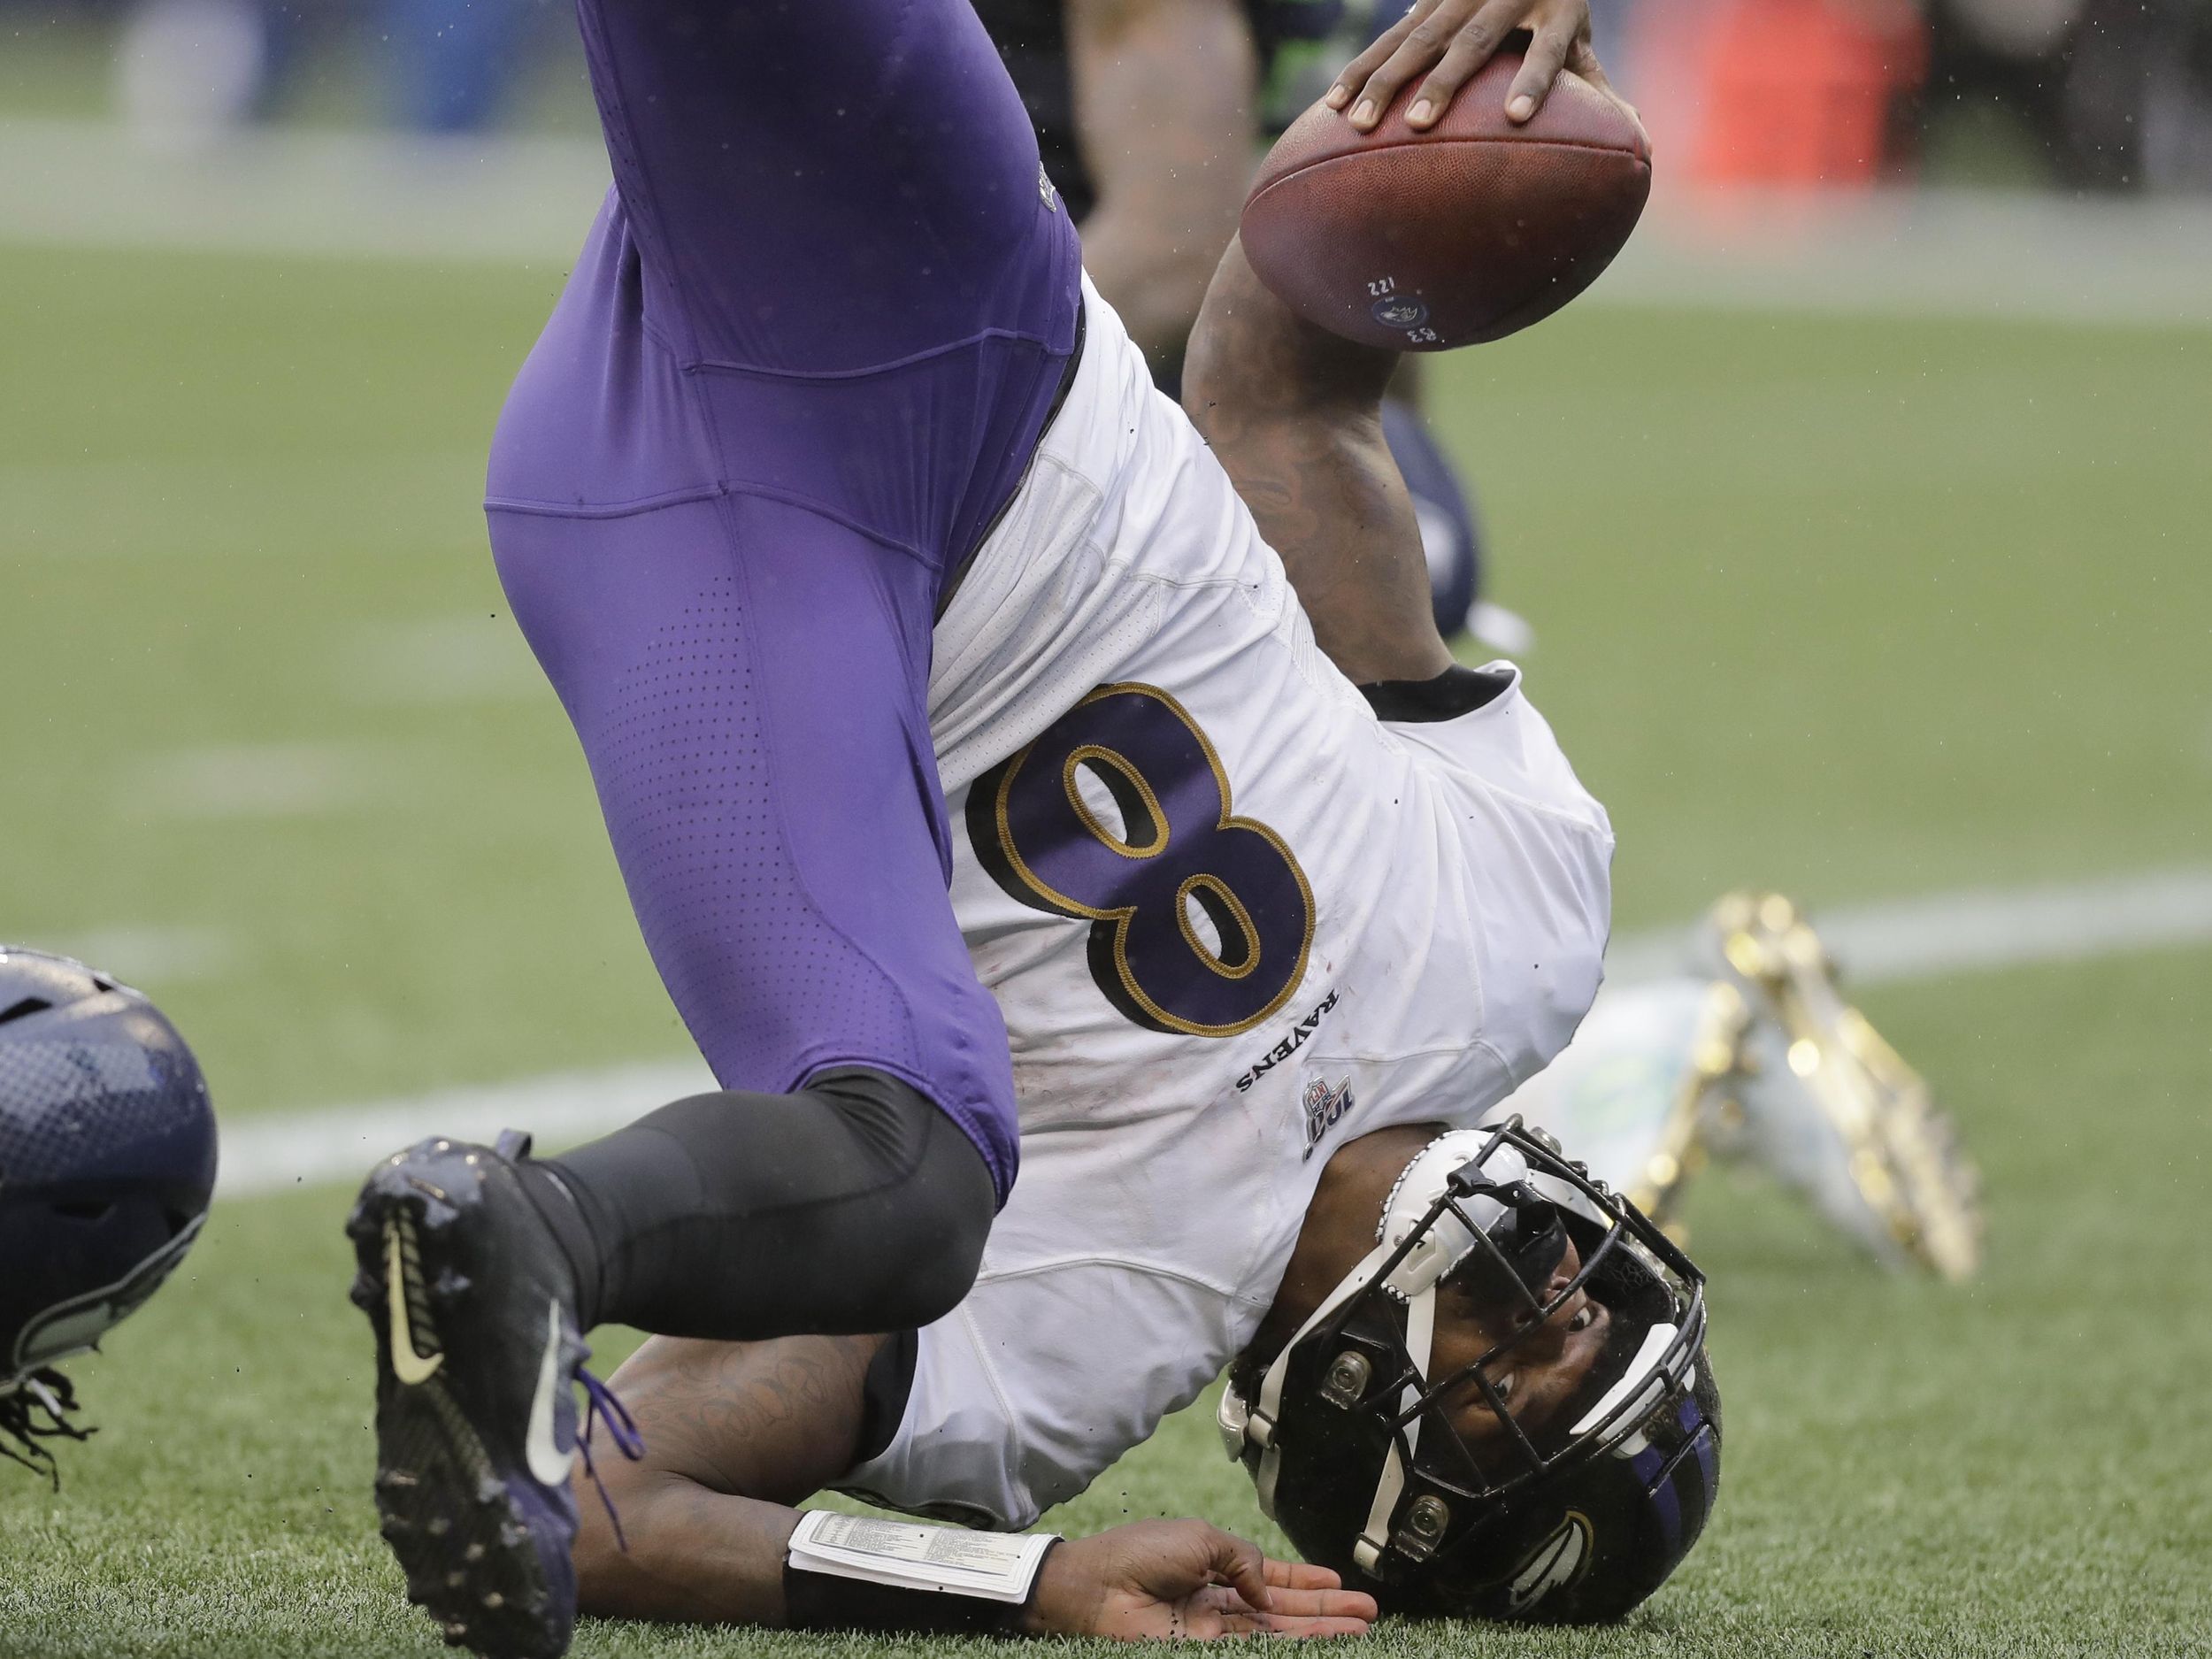 Giants shock Ravens after Lamar Jackson's crucial fourth-quarter turnovers